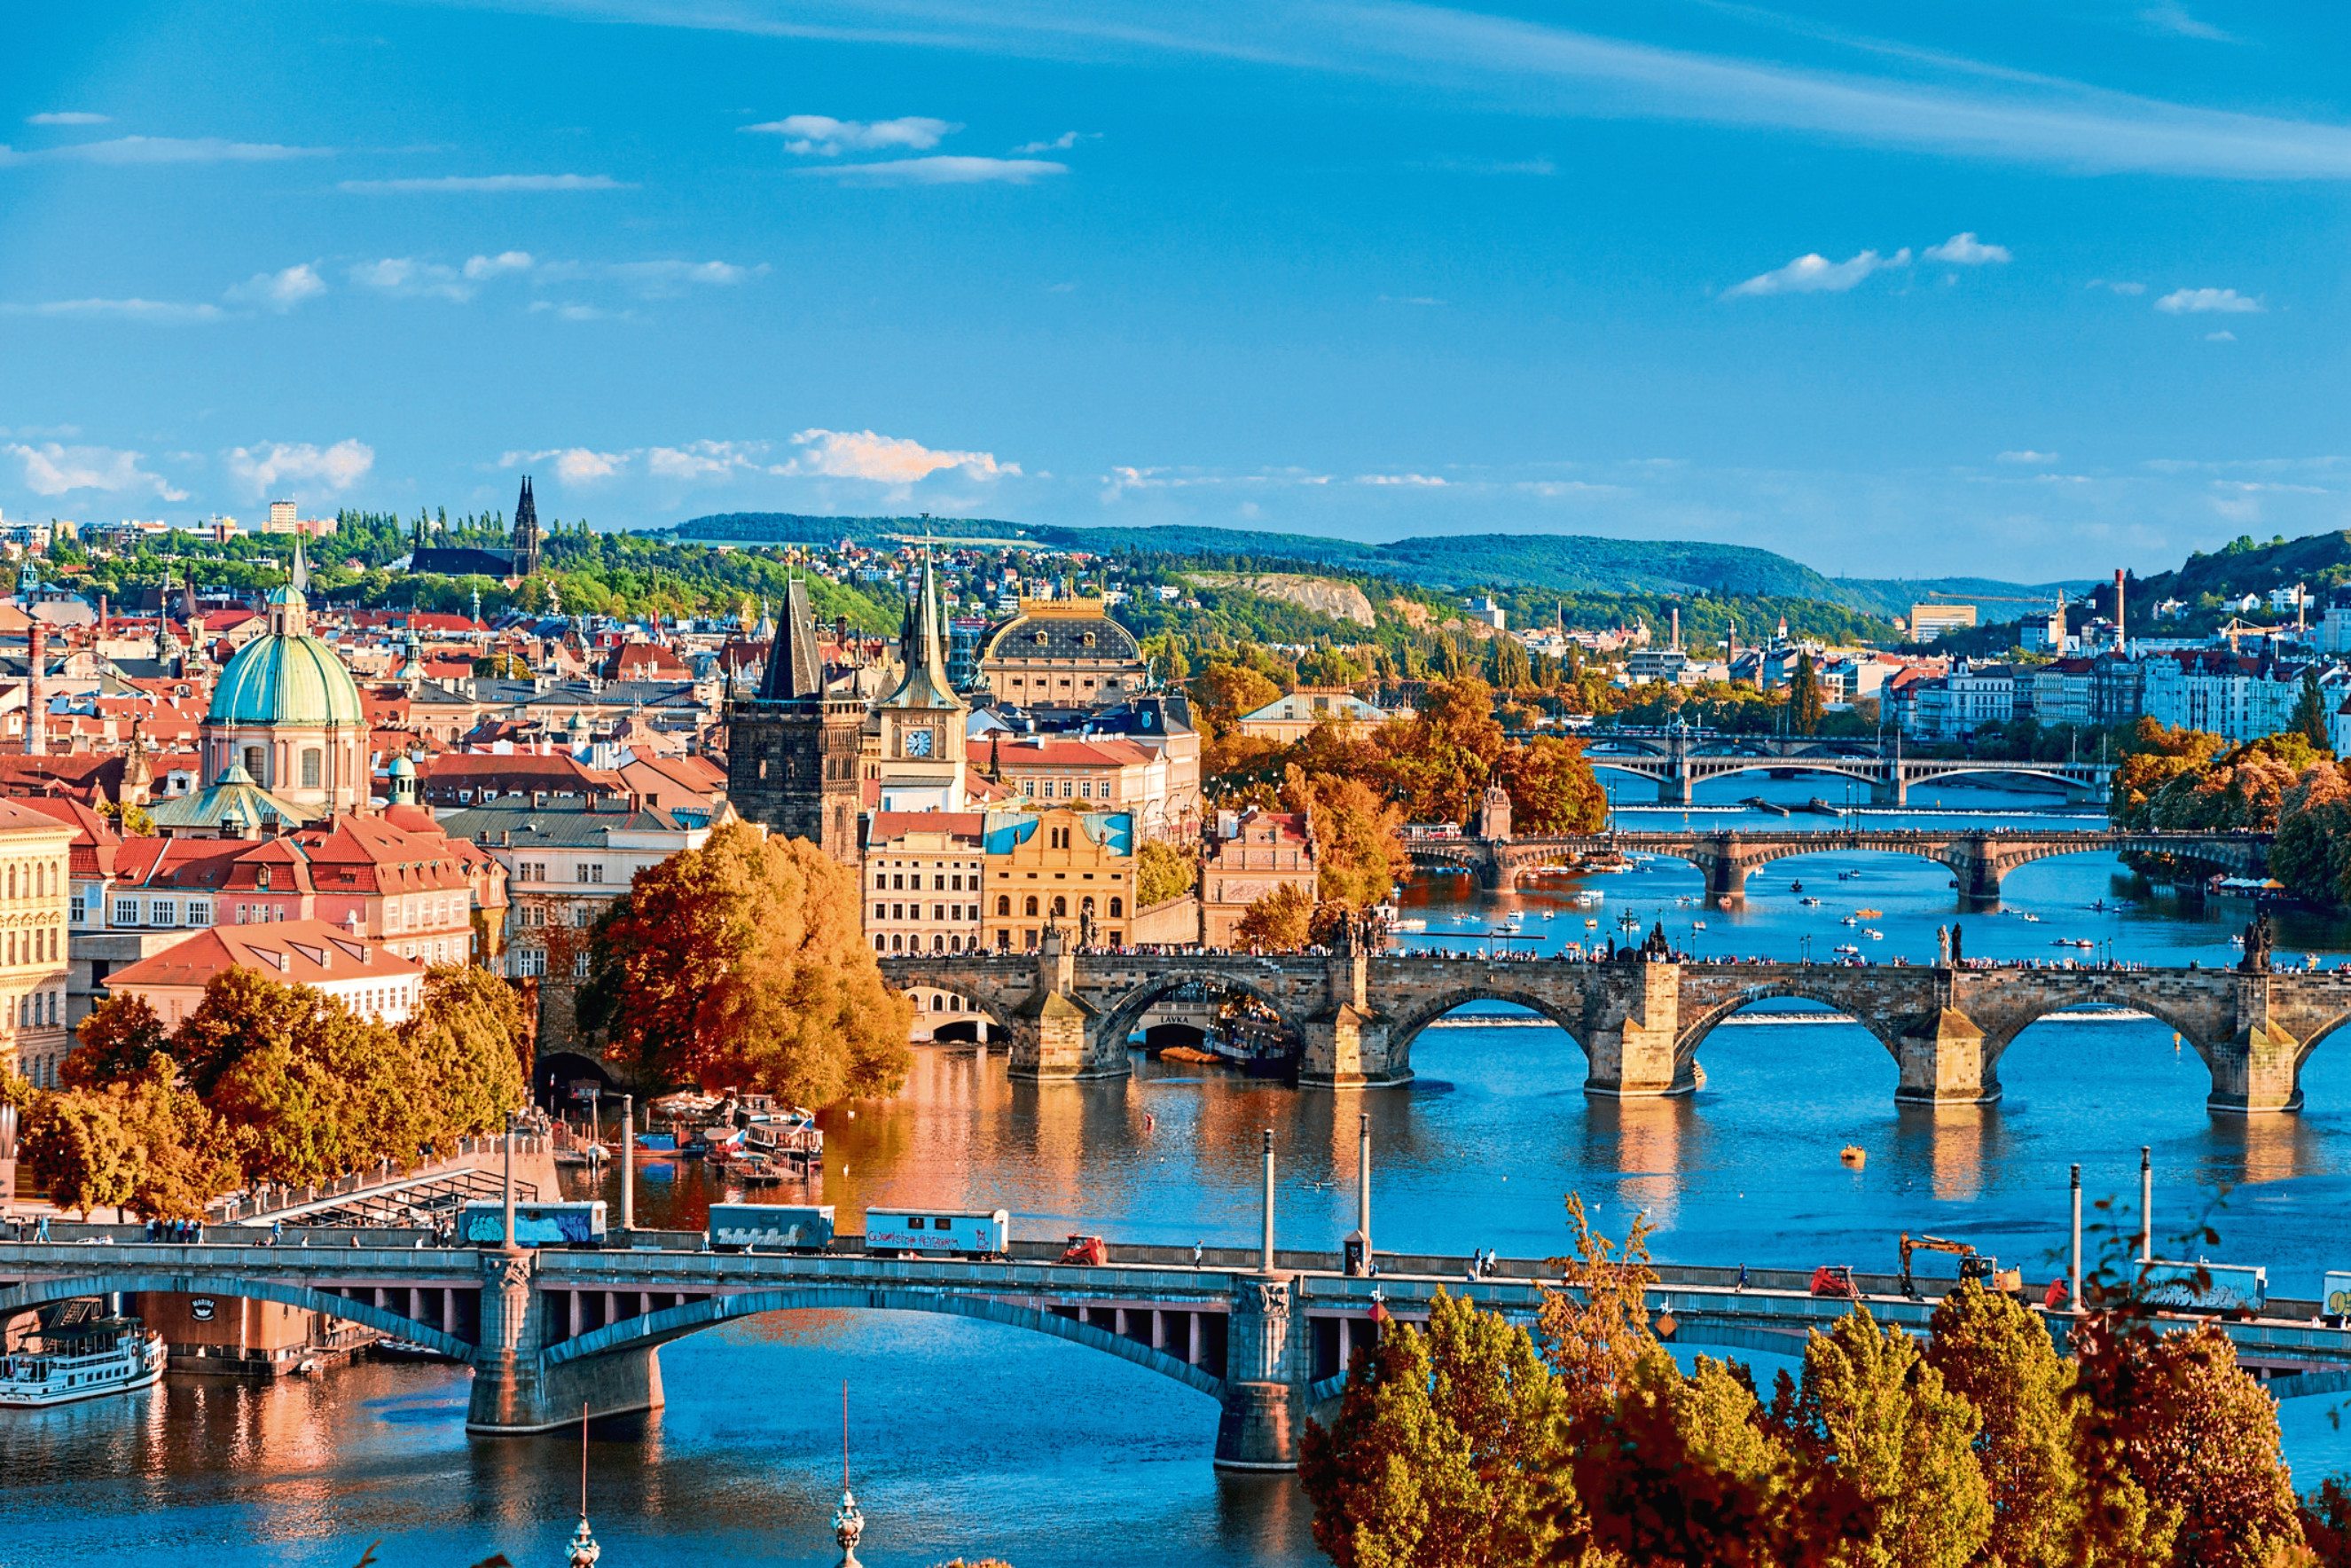 Prague
View of the Vltava River and Charle bridge with red foliage, Prague, Czech Republic